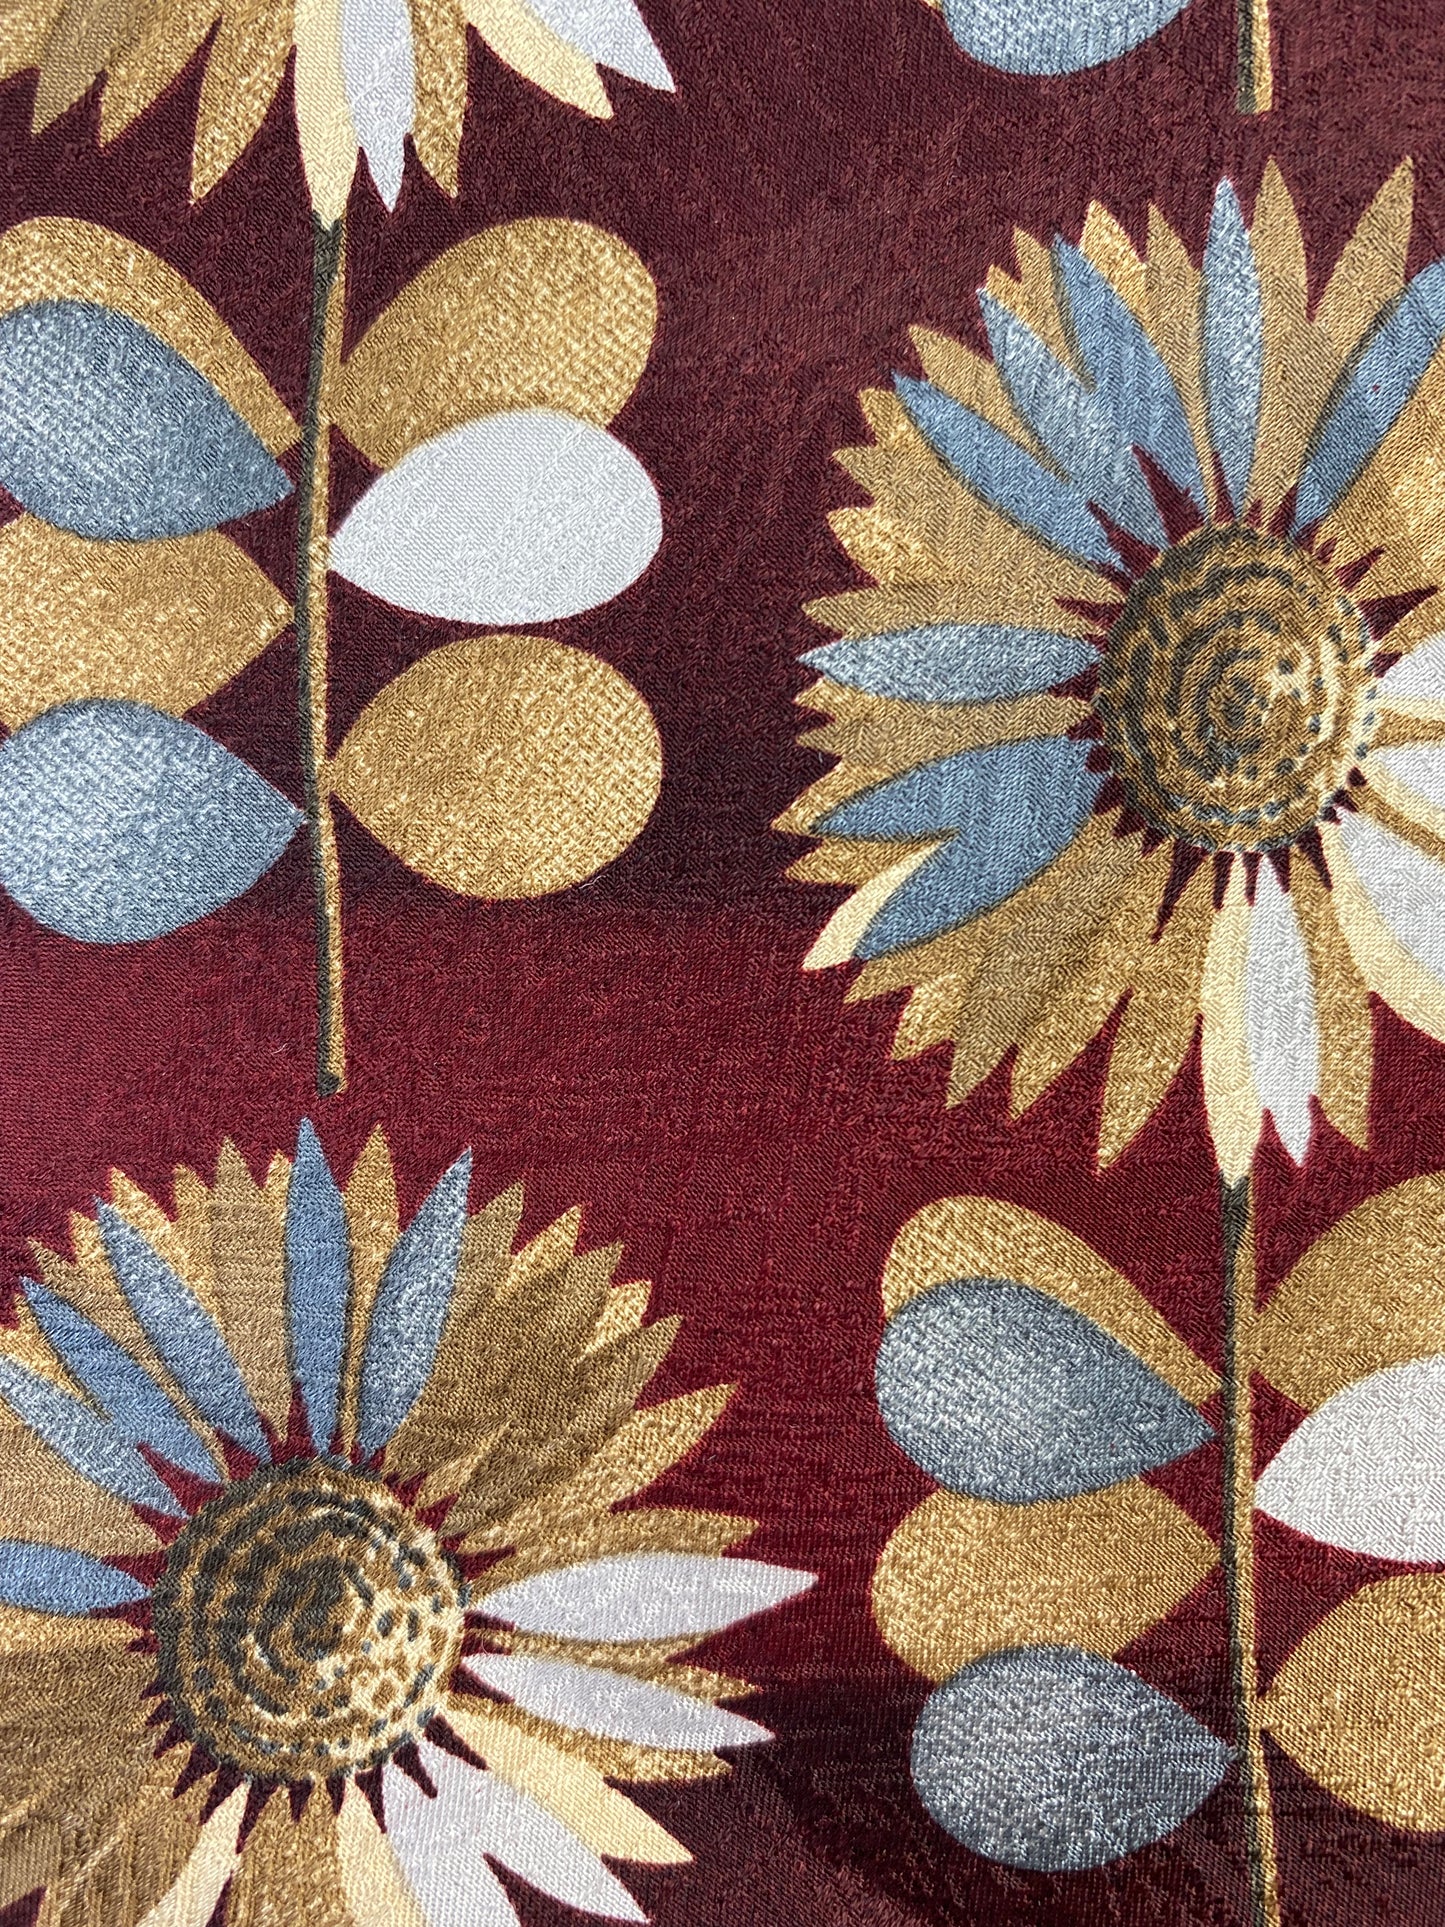 Close-up of: 90s Deadstock Silk Necktie, Men's Vintage Wine/ Gold/ Silver Floral Pattern Tie, NOS